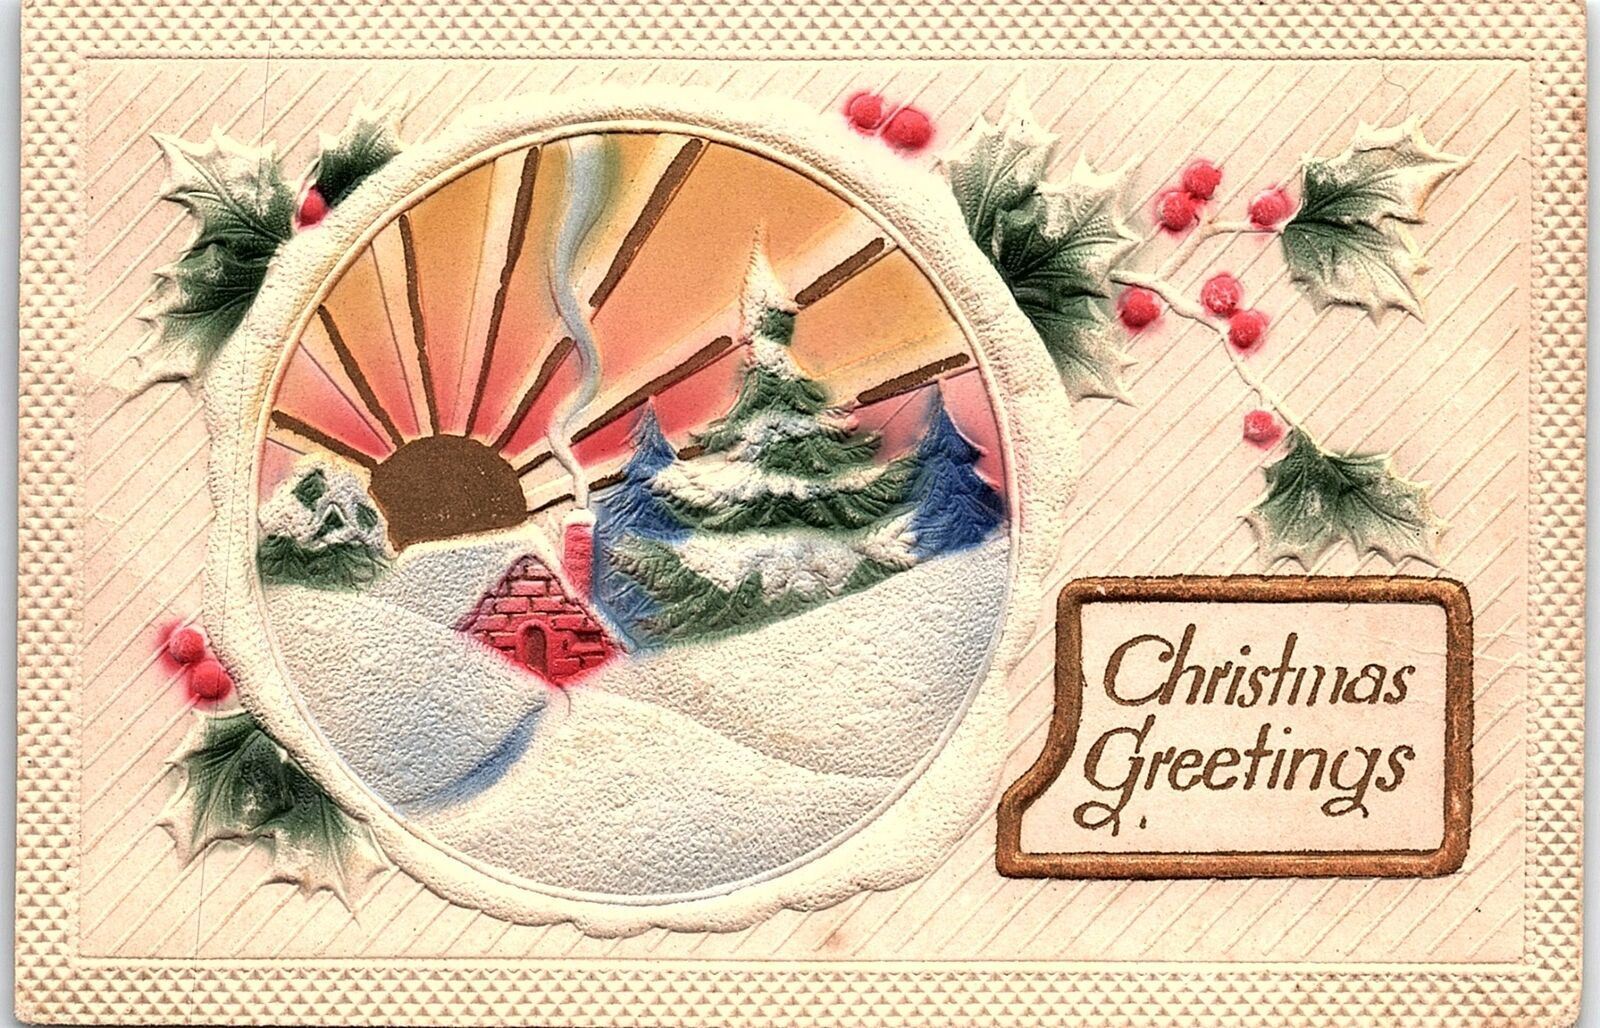 c1910 CHRISTMAS GREETINGS HOLLY CABIN SUNRISE HEAVILY EMBOSSED POSTCARD 39-243